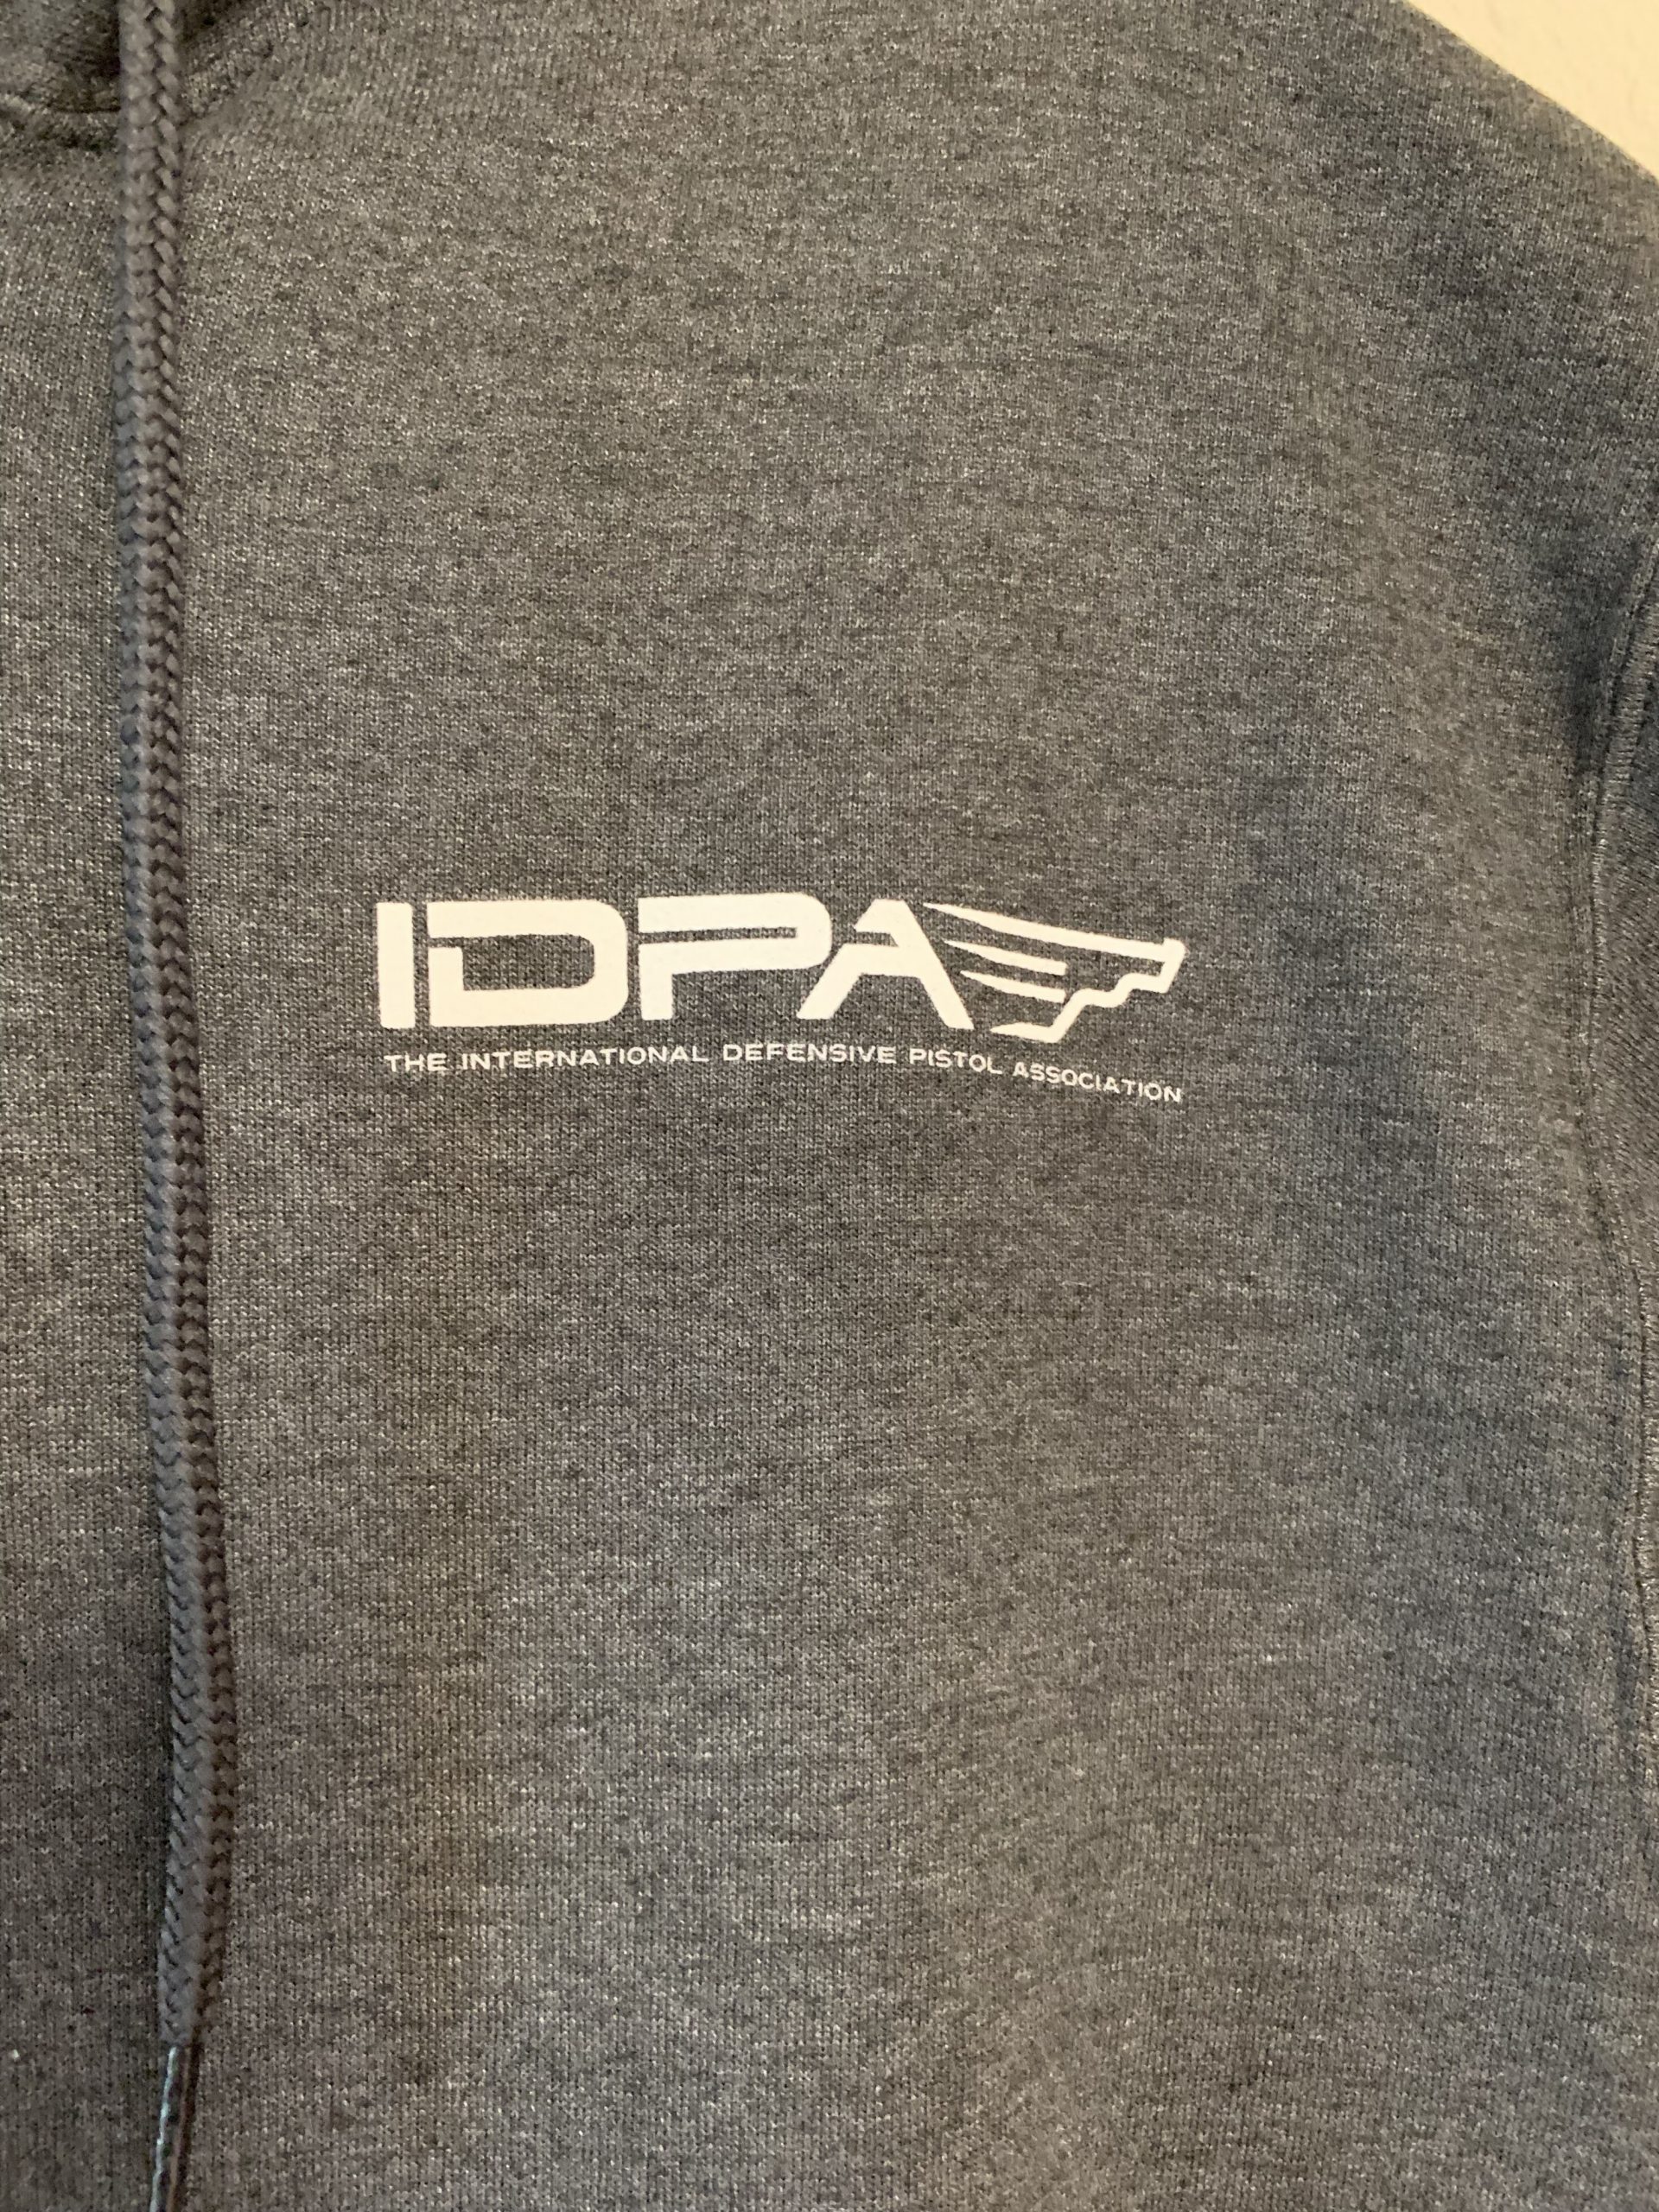 IDPA Airsoft Training Kit – International Defensive Pistol Association